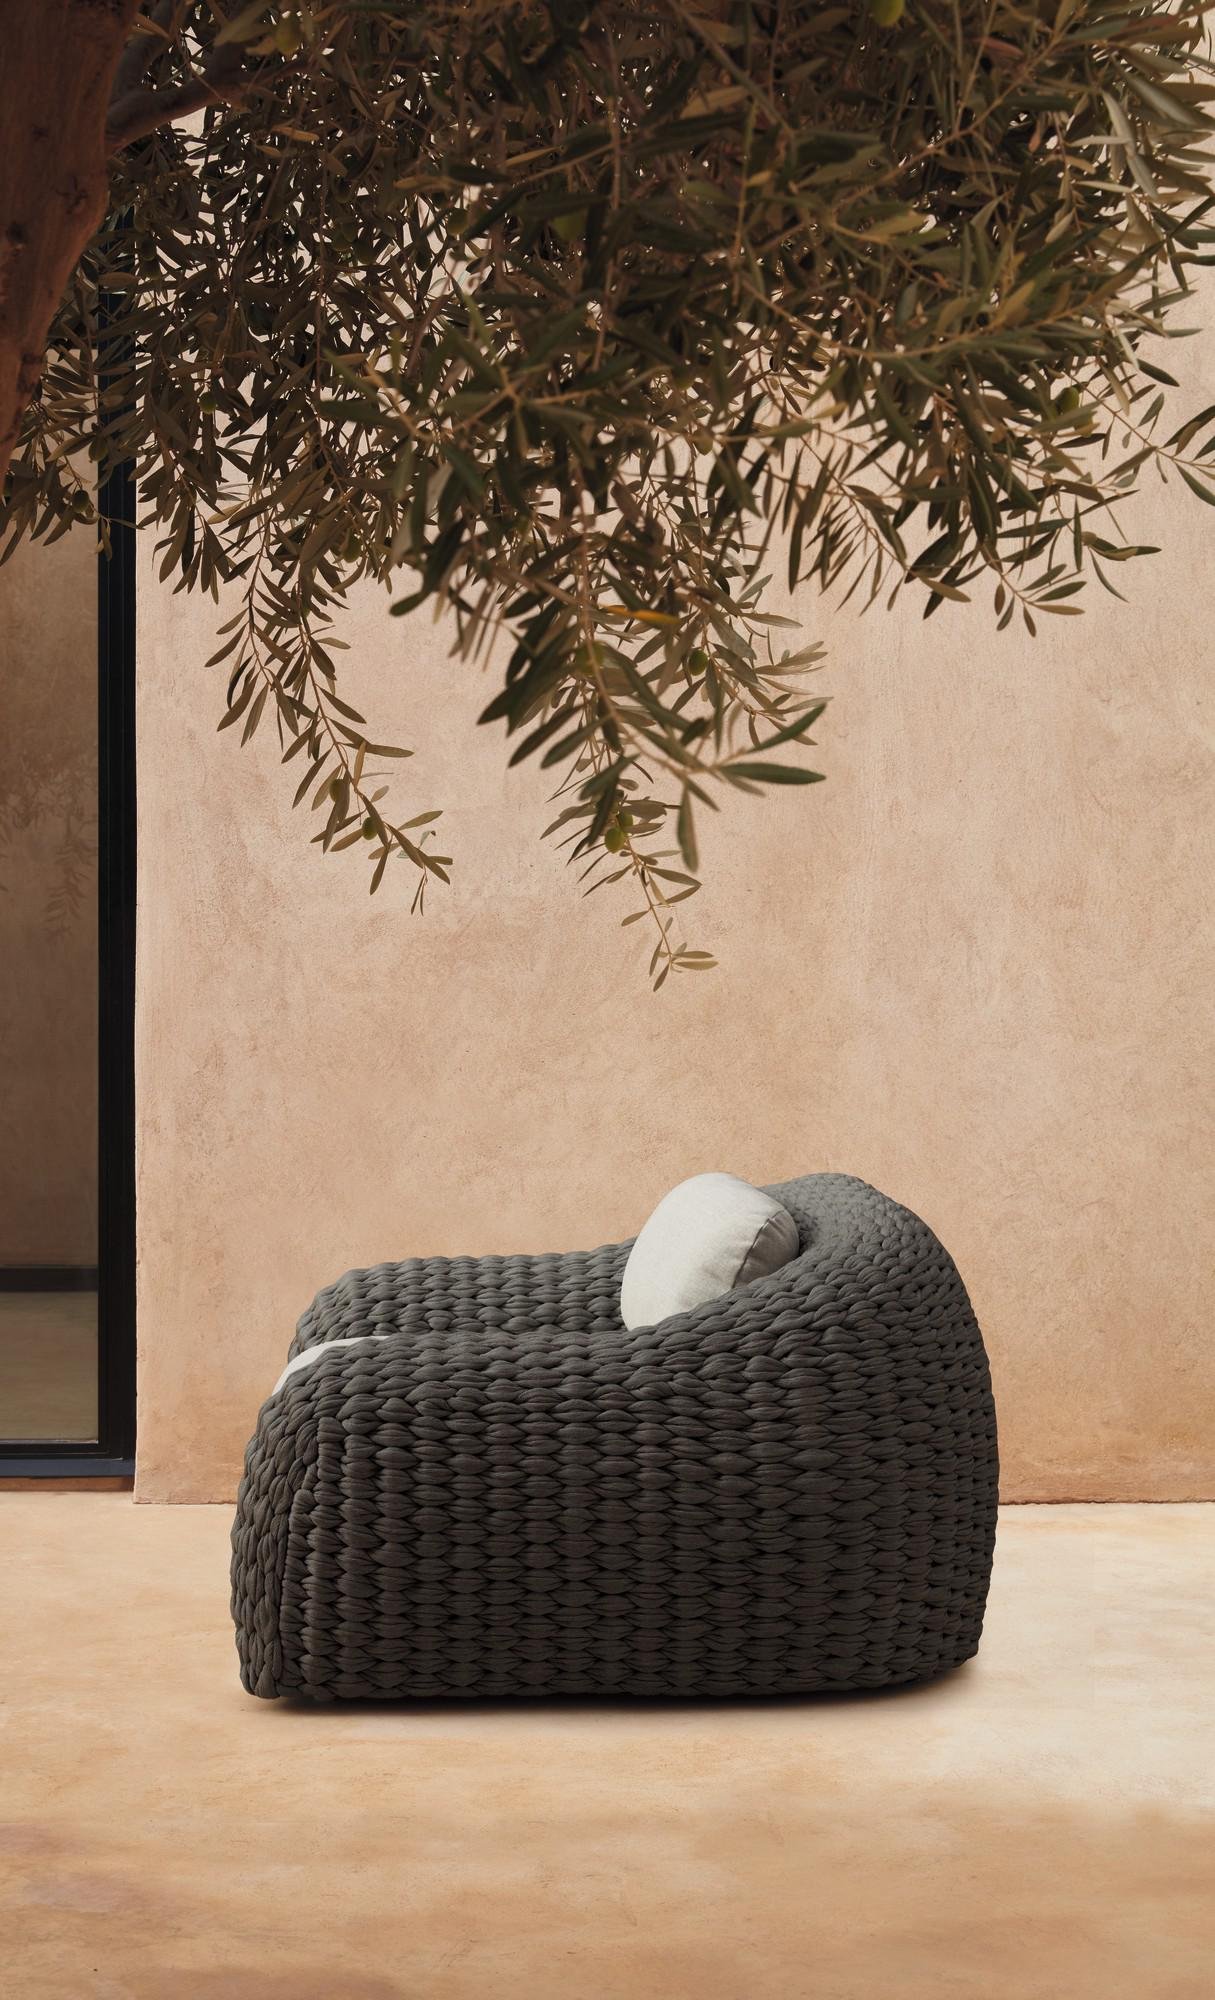 Kobo Lounge Chair from Manutti, designed by Stephane De Winter